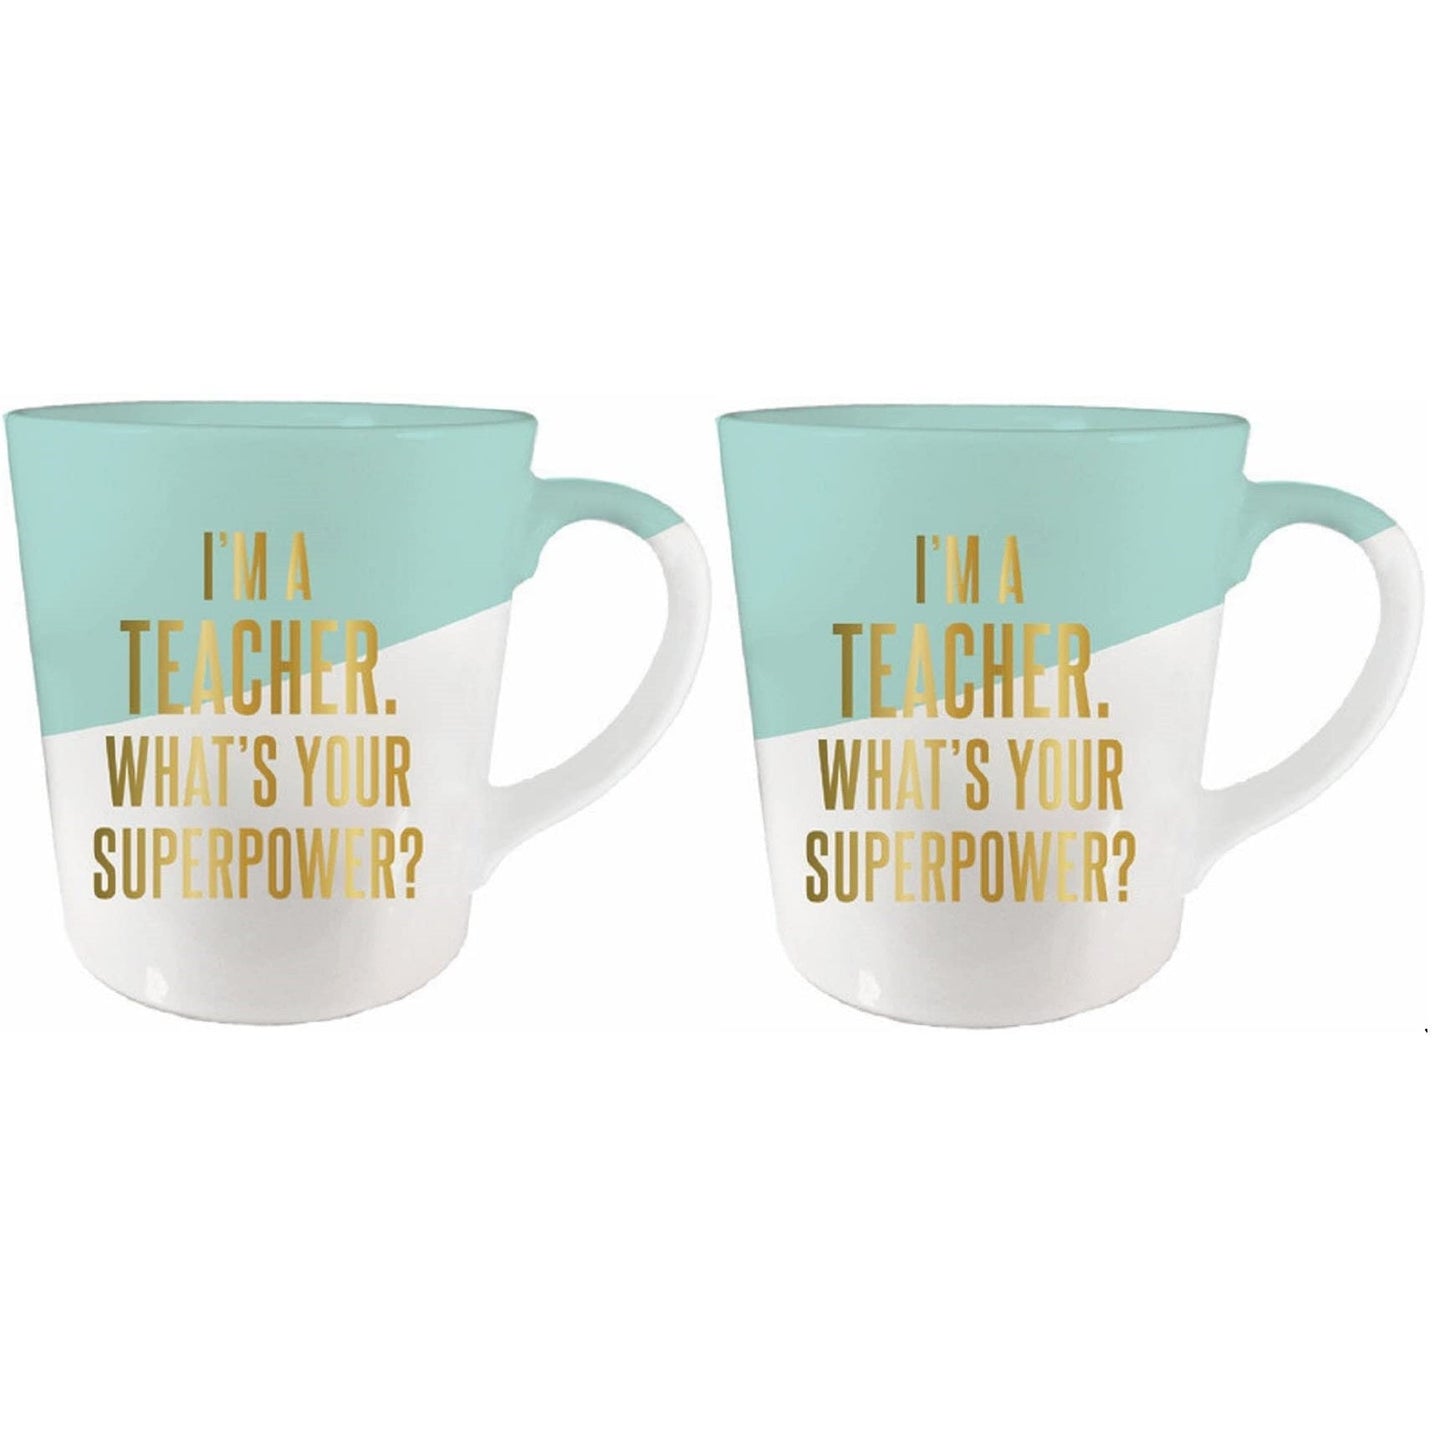 I'm A Teacher - What's Your Superpower Ceramic Coffee Mug | Set of 2